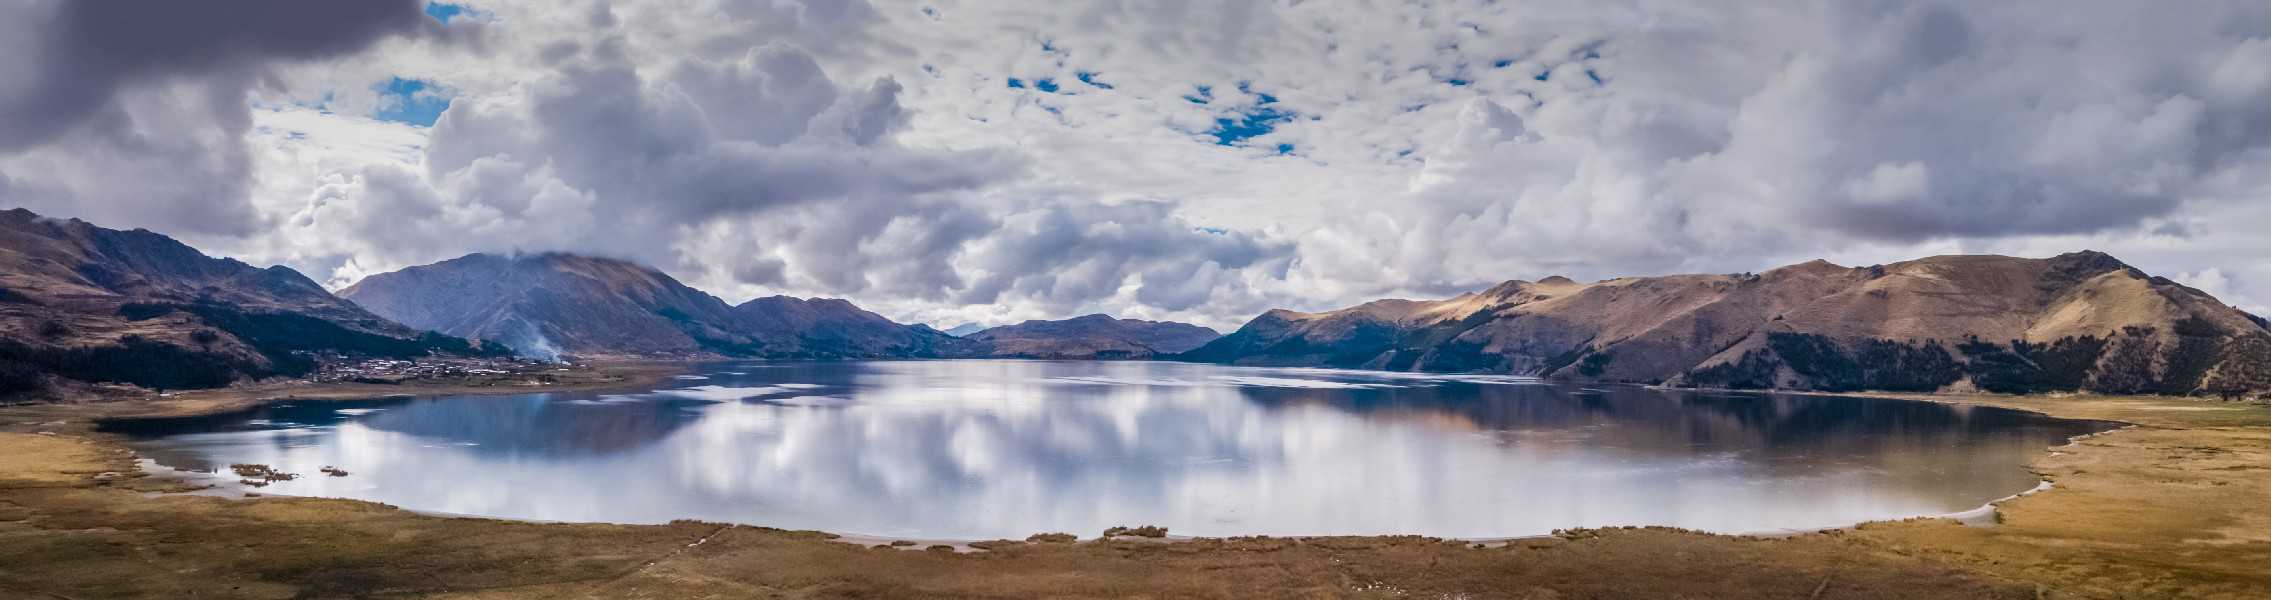 scenic Panorama near a Hidden Gem of the Andes, Waqra Pukara